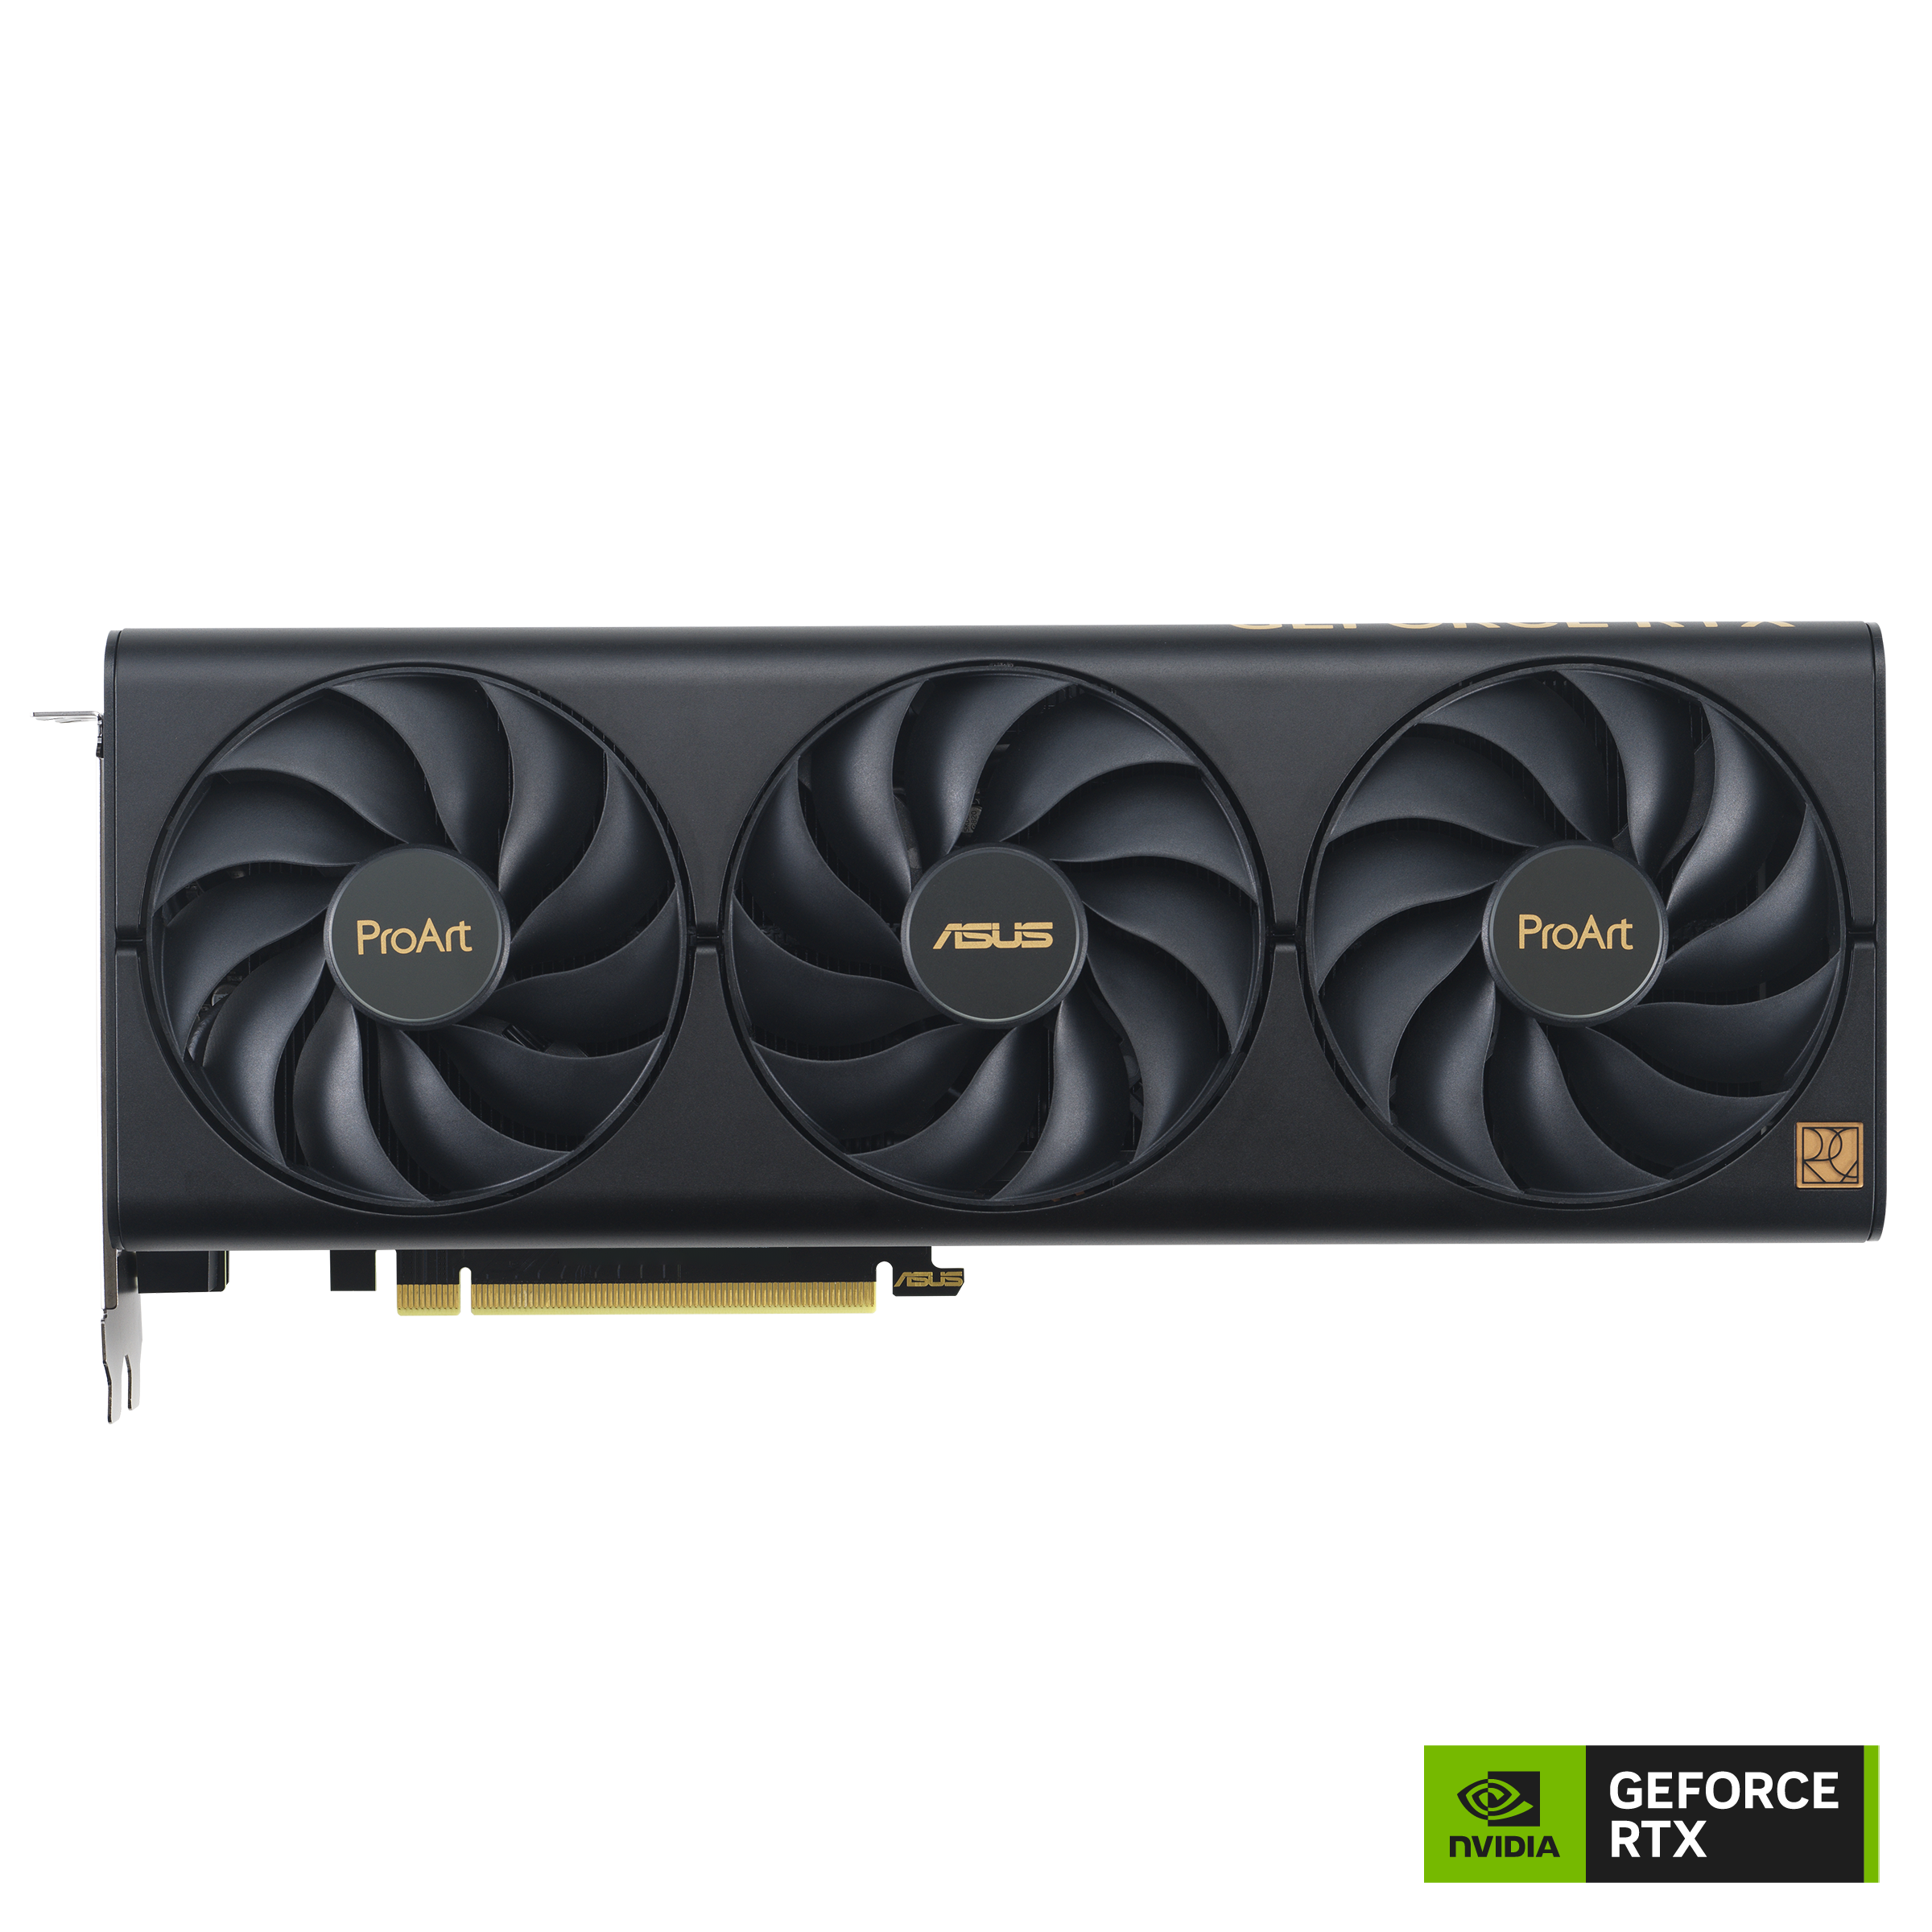 Gigabyte GeForce RTX 4080 AERO OC 3xDP HDMI 16GB • Price »